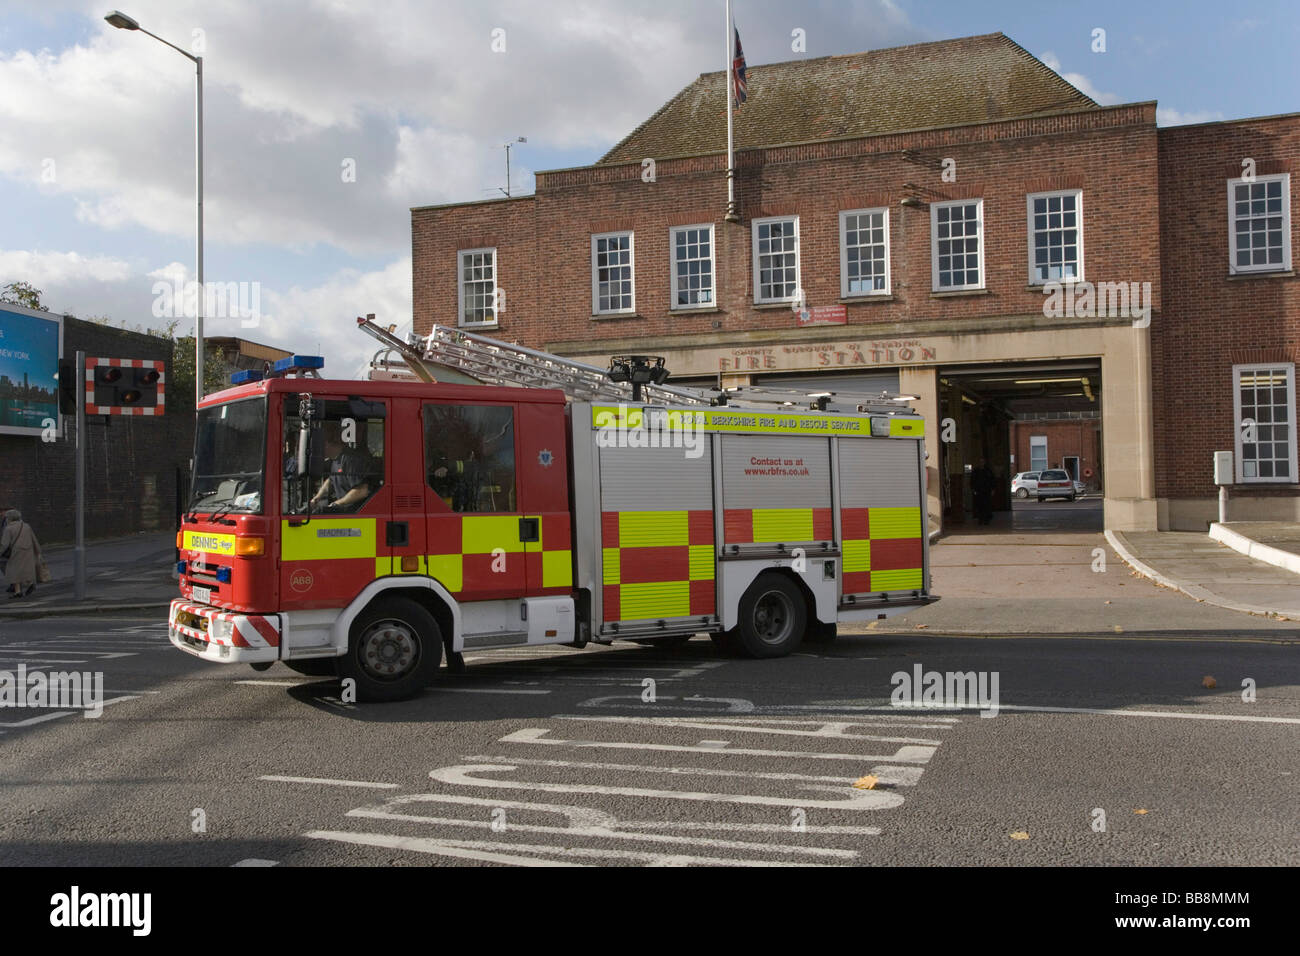 Fire engine, Fire Station, County Borough, Reading, Berkshire, UK Stock Photo